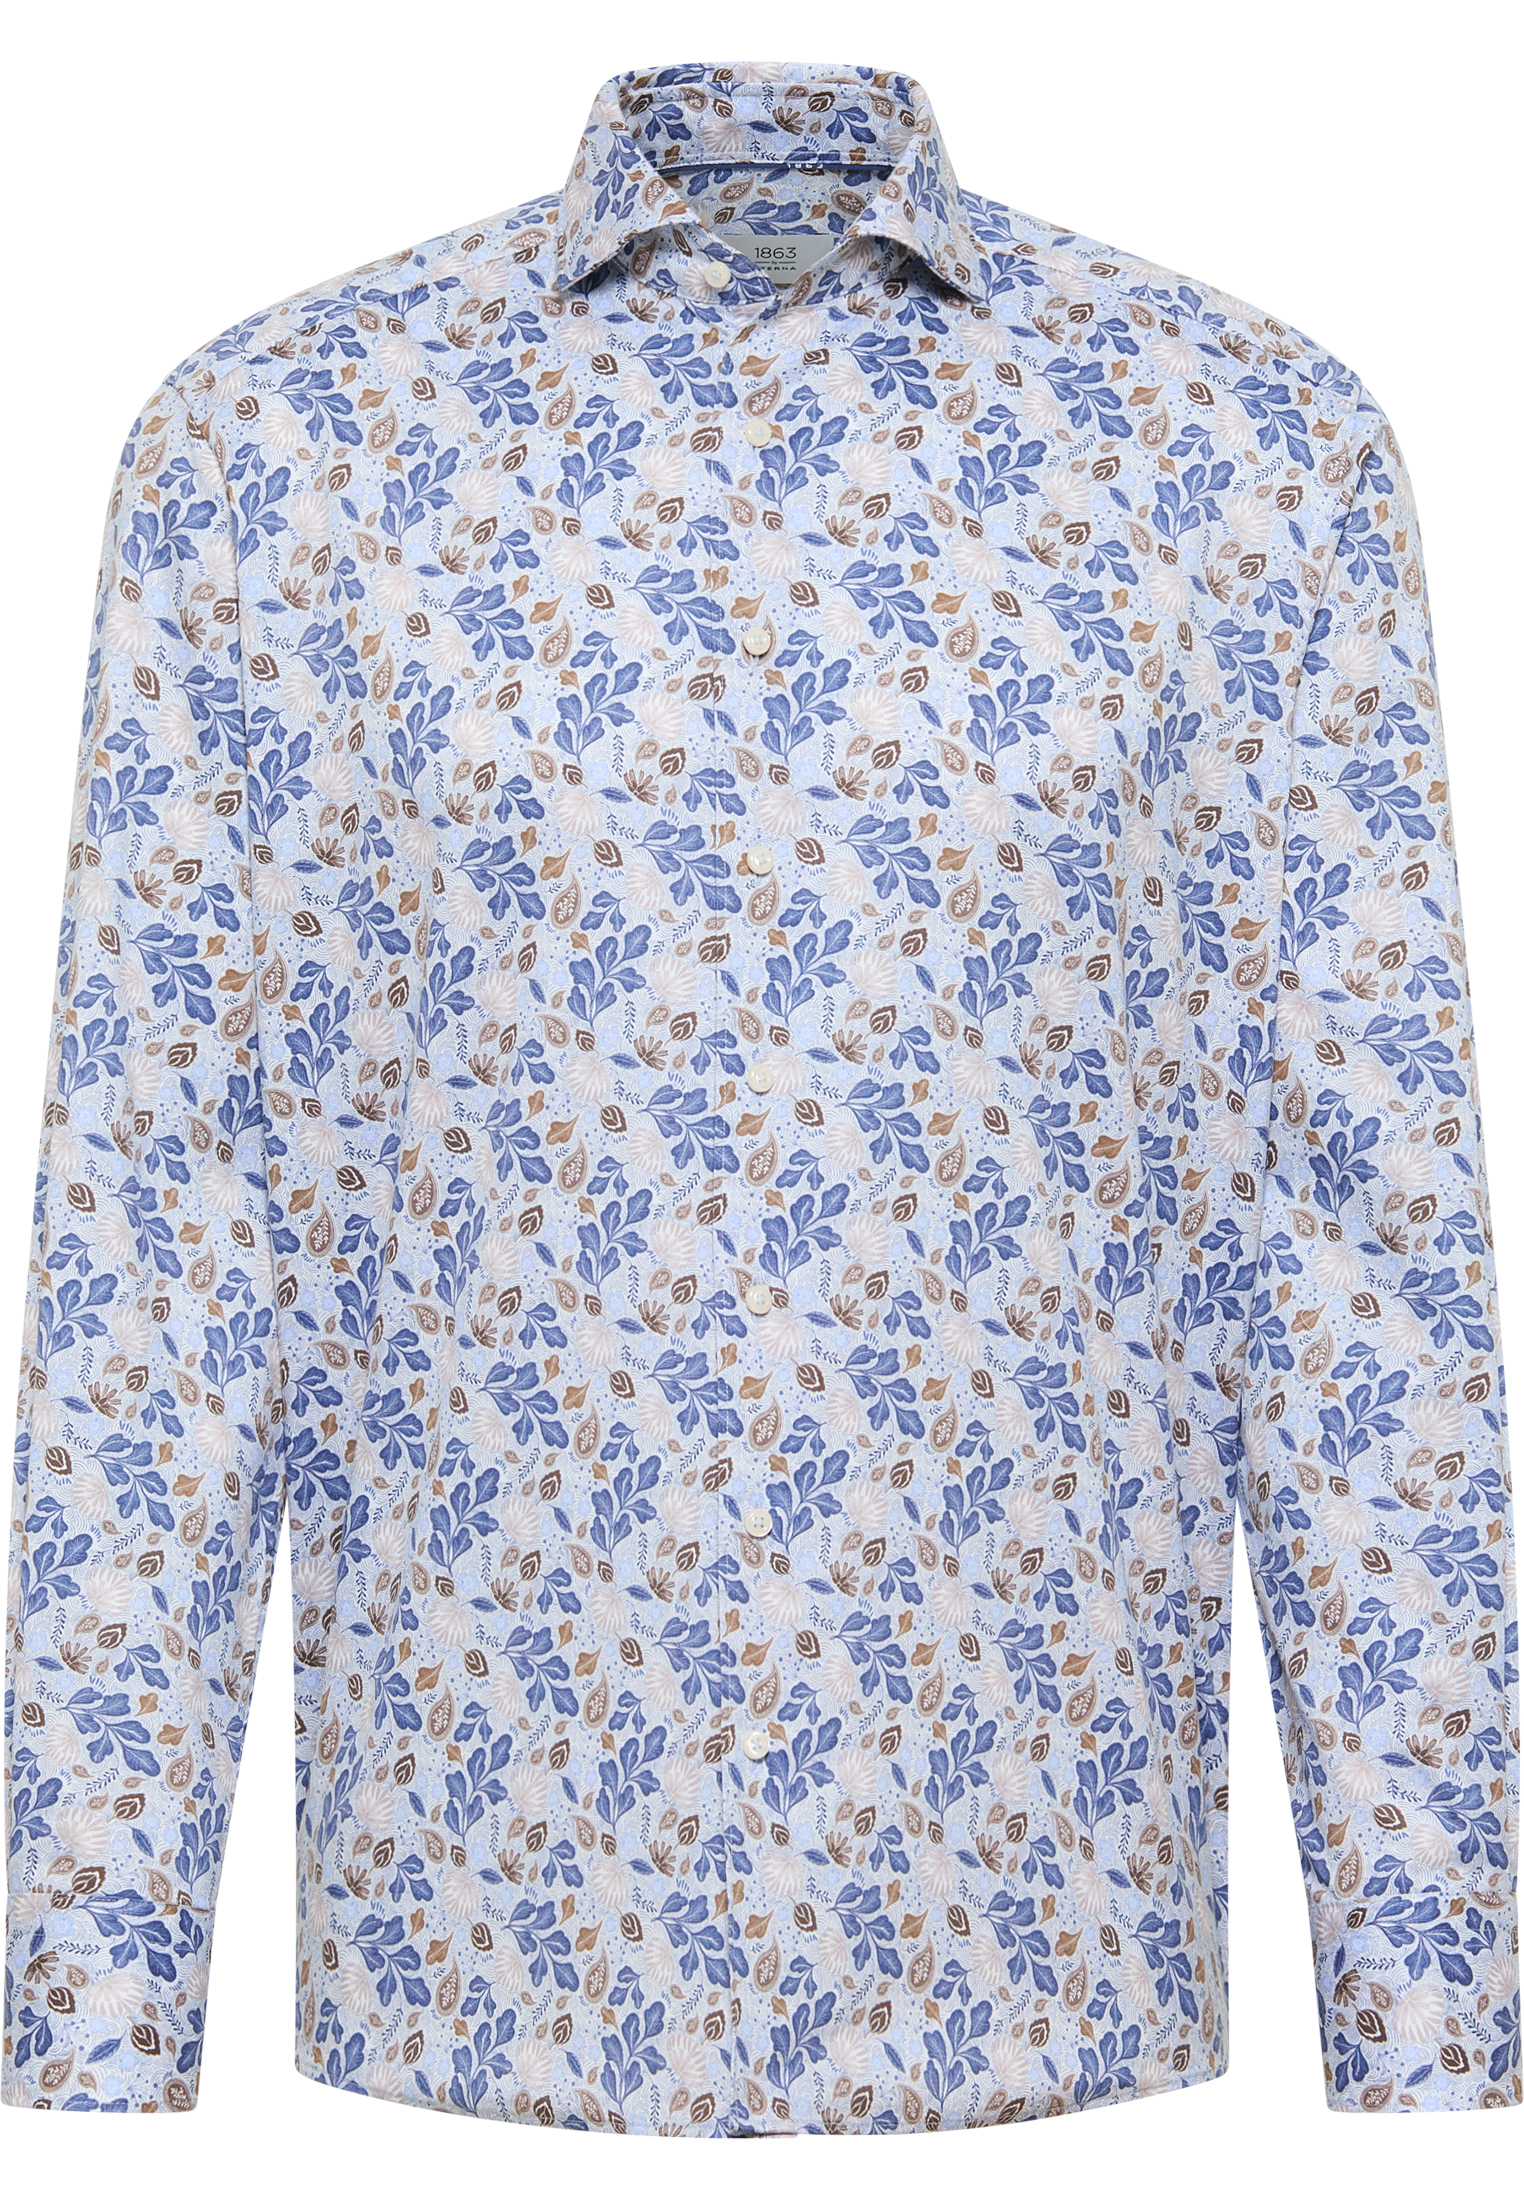 COMFORT FIT Shirt in royal blue printed